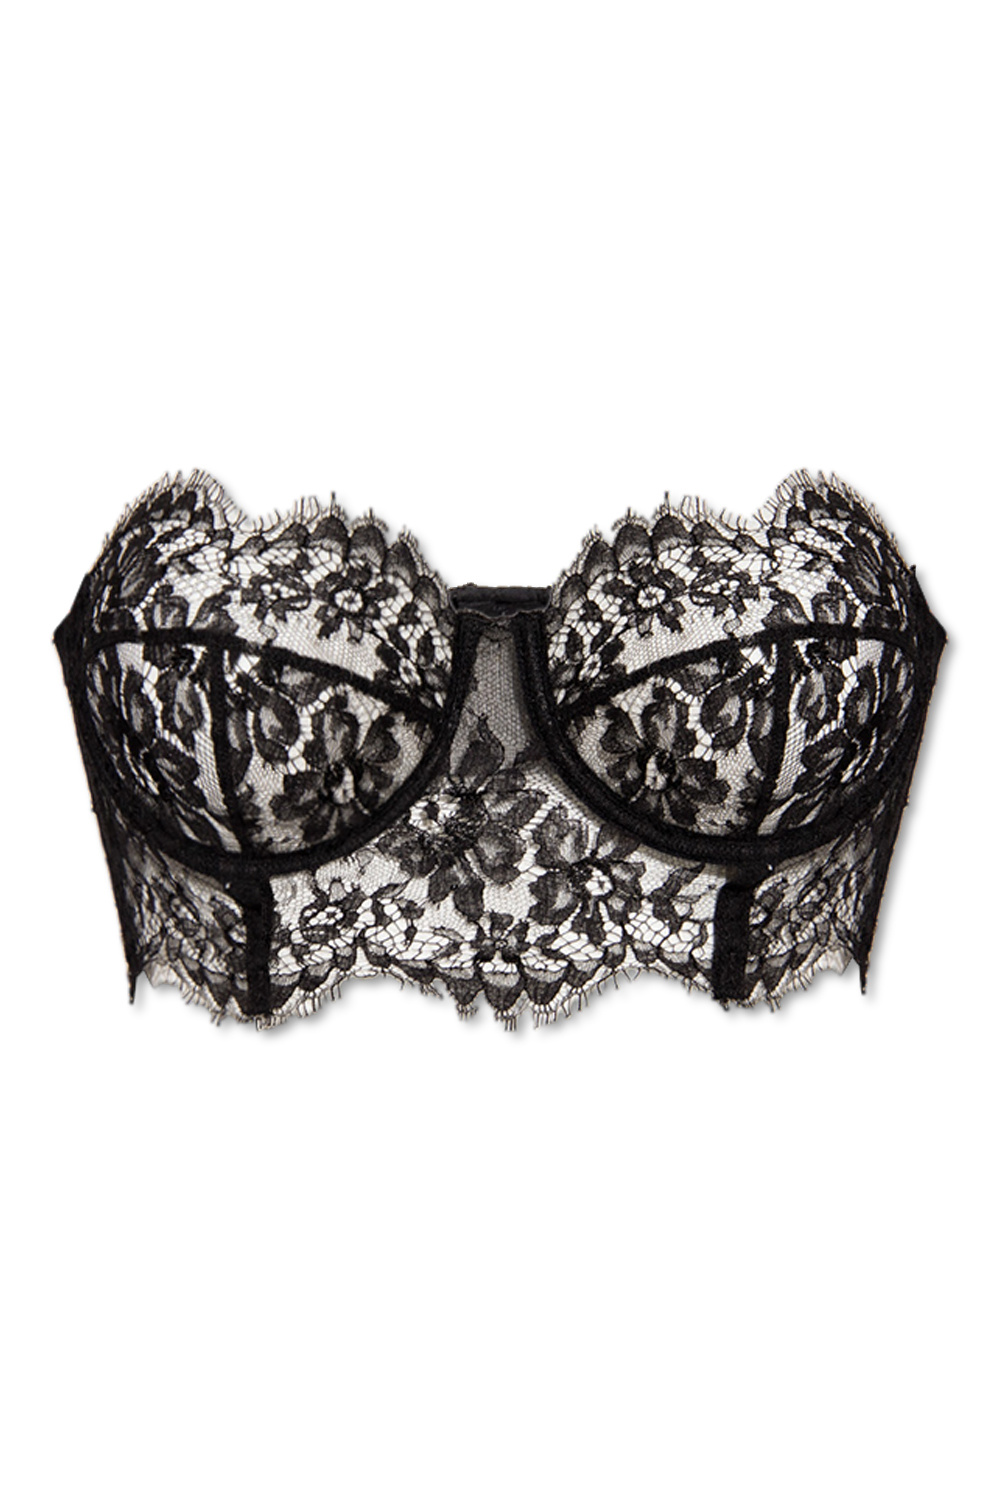 Dolce & Gabbana floral jacquard scarf Lace corset